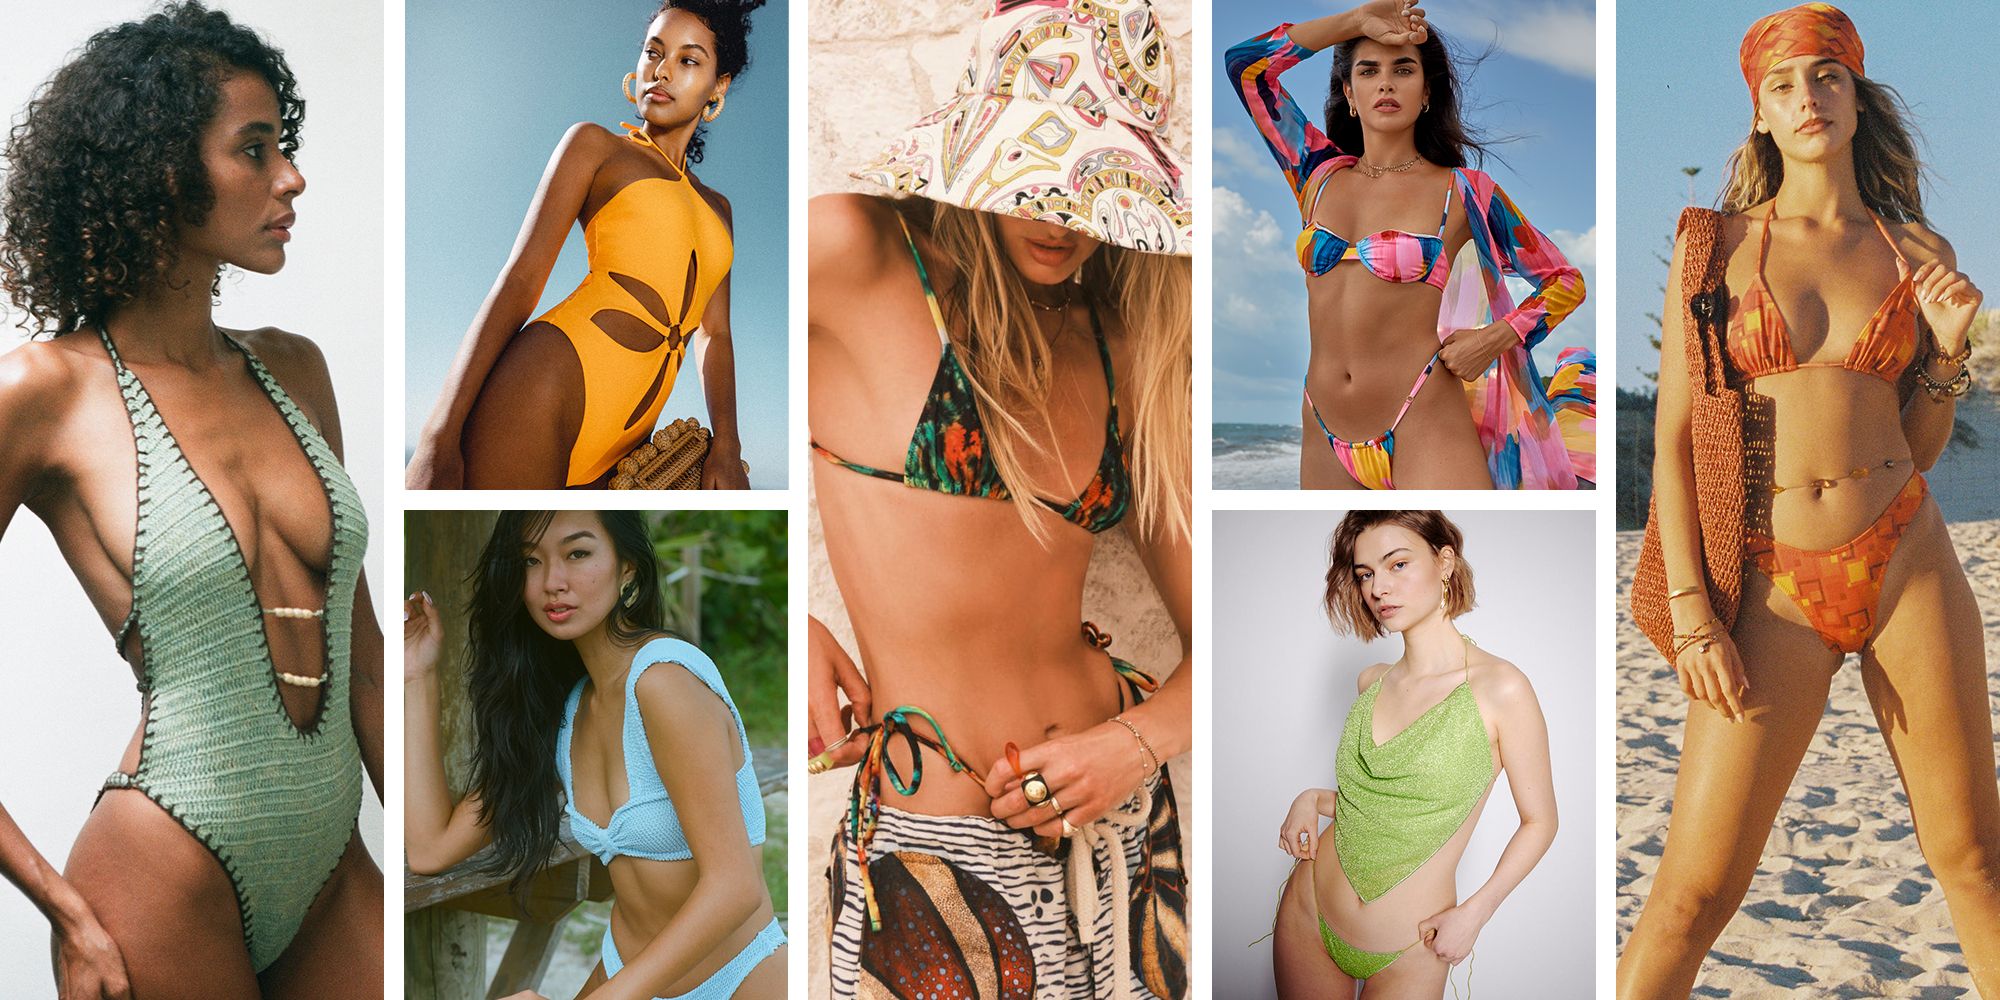 Young bikini models doing sex - Full movie